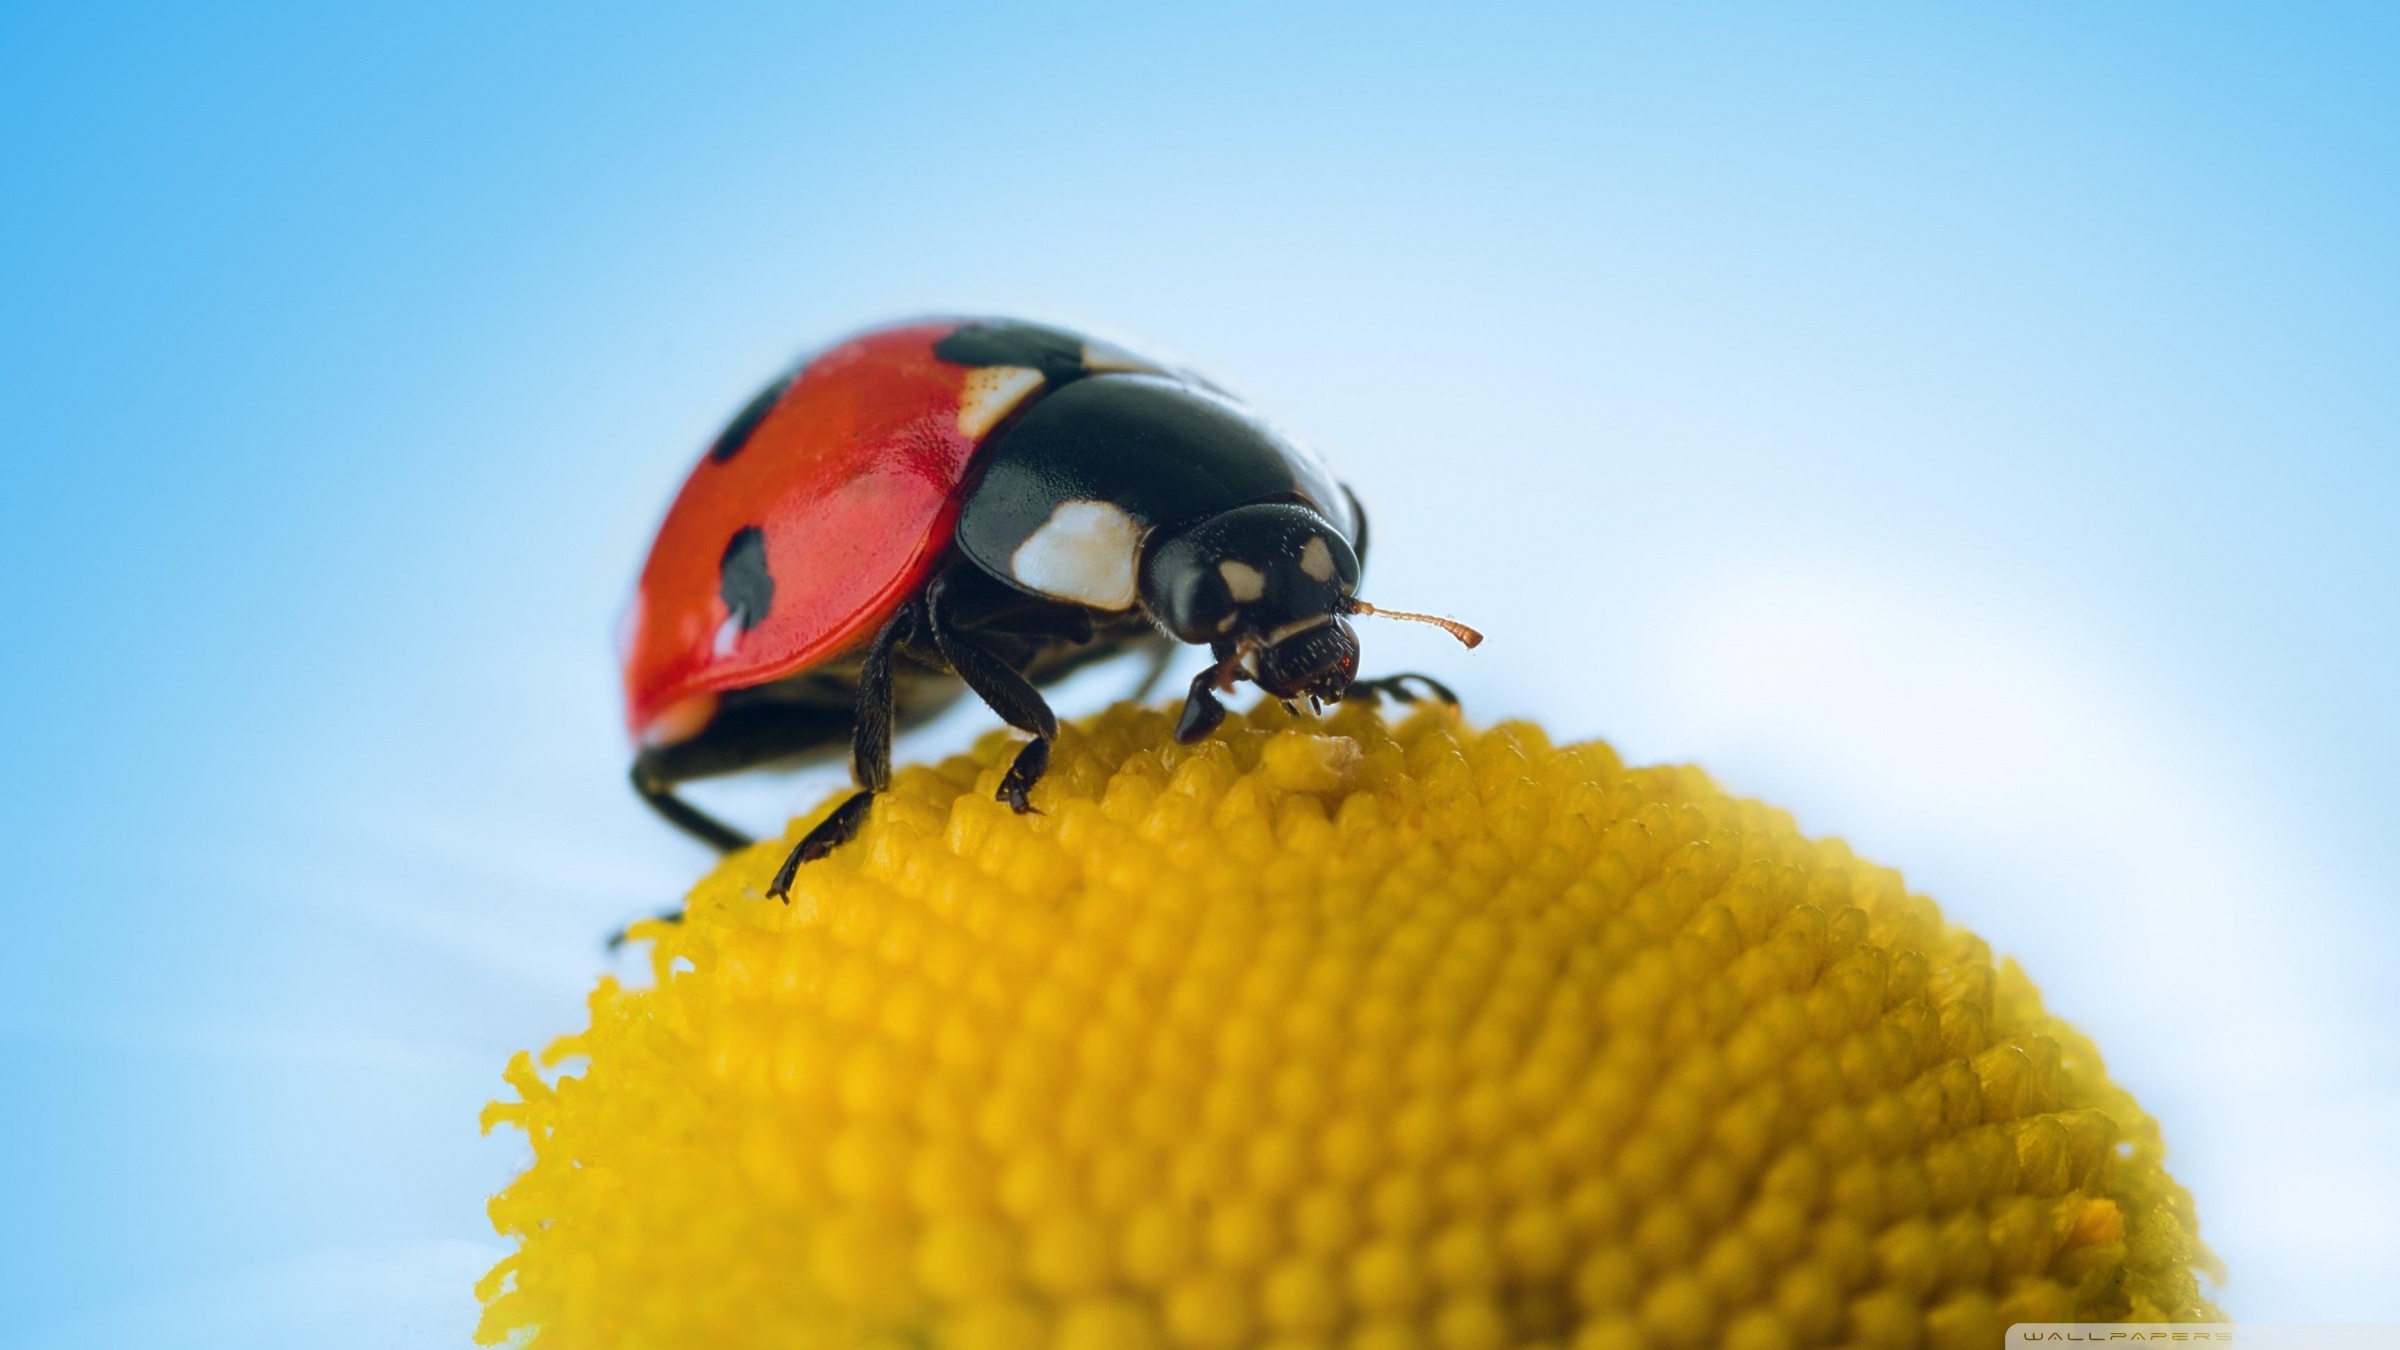 Ladybug Macro HD desktop wallpaper : High Definition : Fullscreen ...